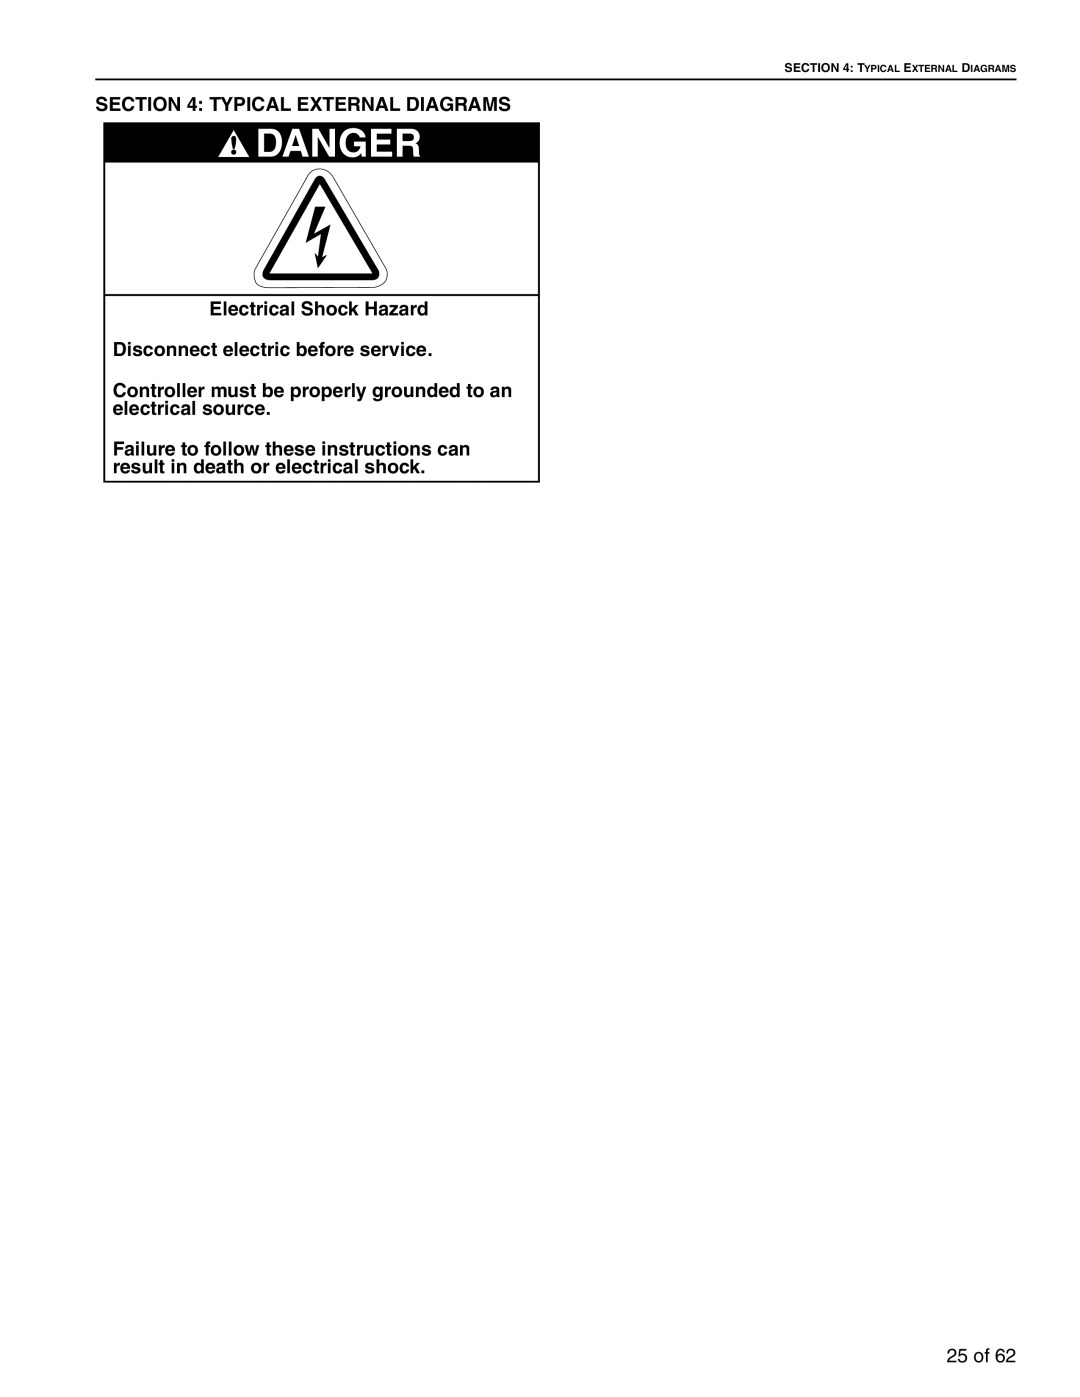 Roberts Gorden 10081601NA Rev H 12/11 service manual Typical External Diagrams, Danger, Electrical Shock Hazard 